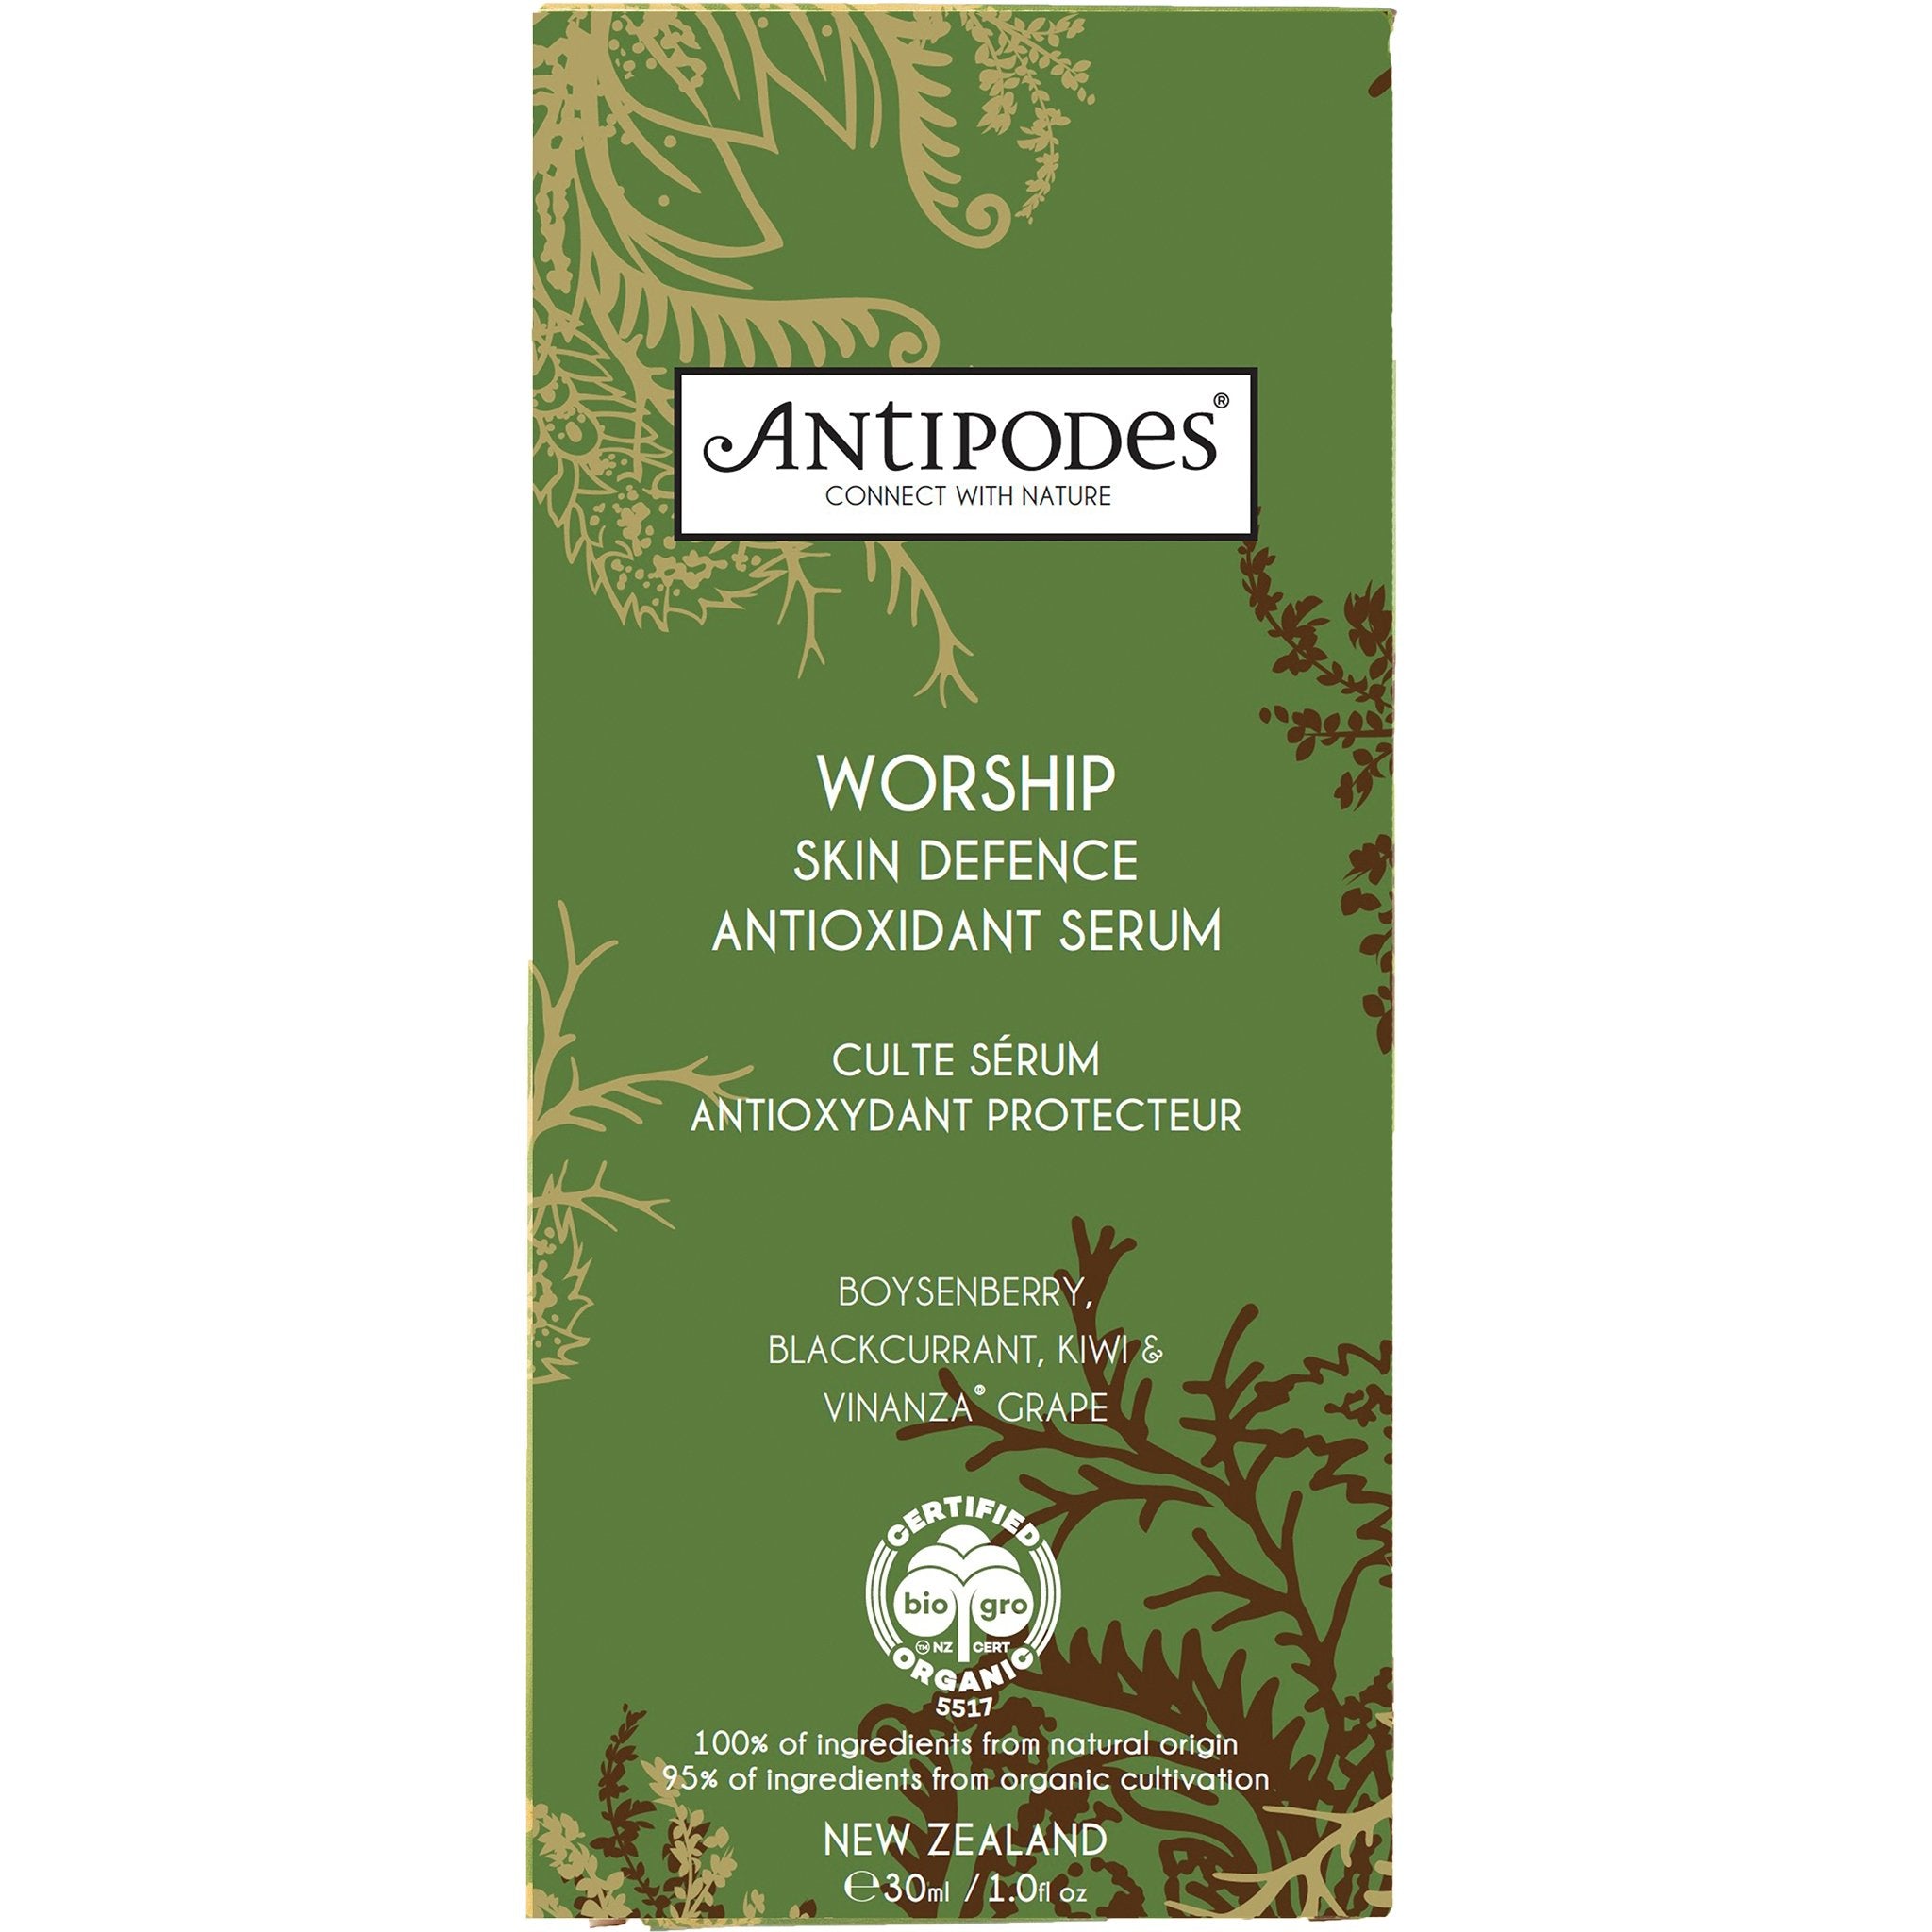 Worship Skin Defence Antioxidant Serum - mypure.co.uk